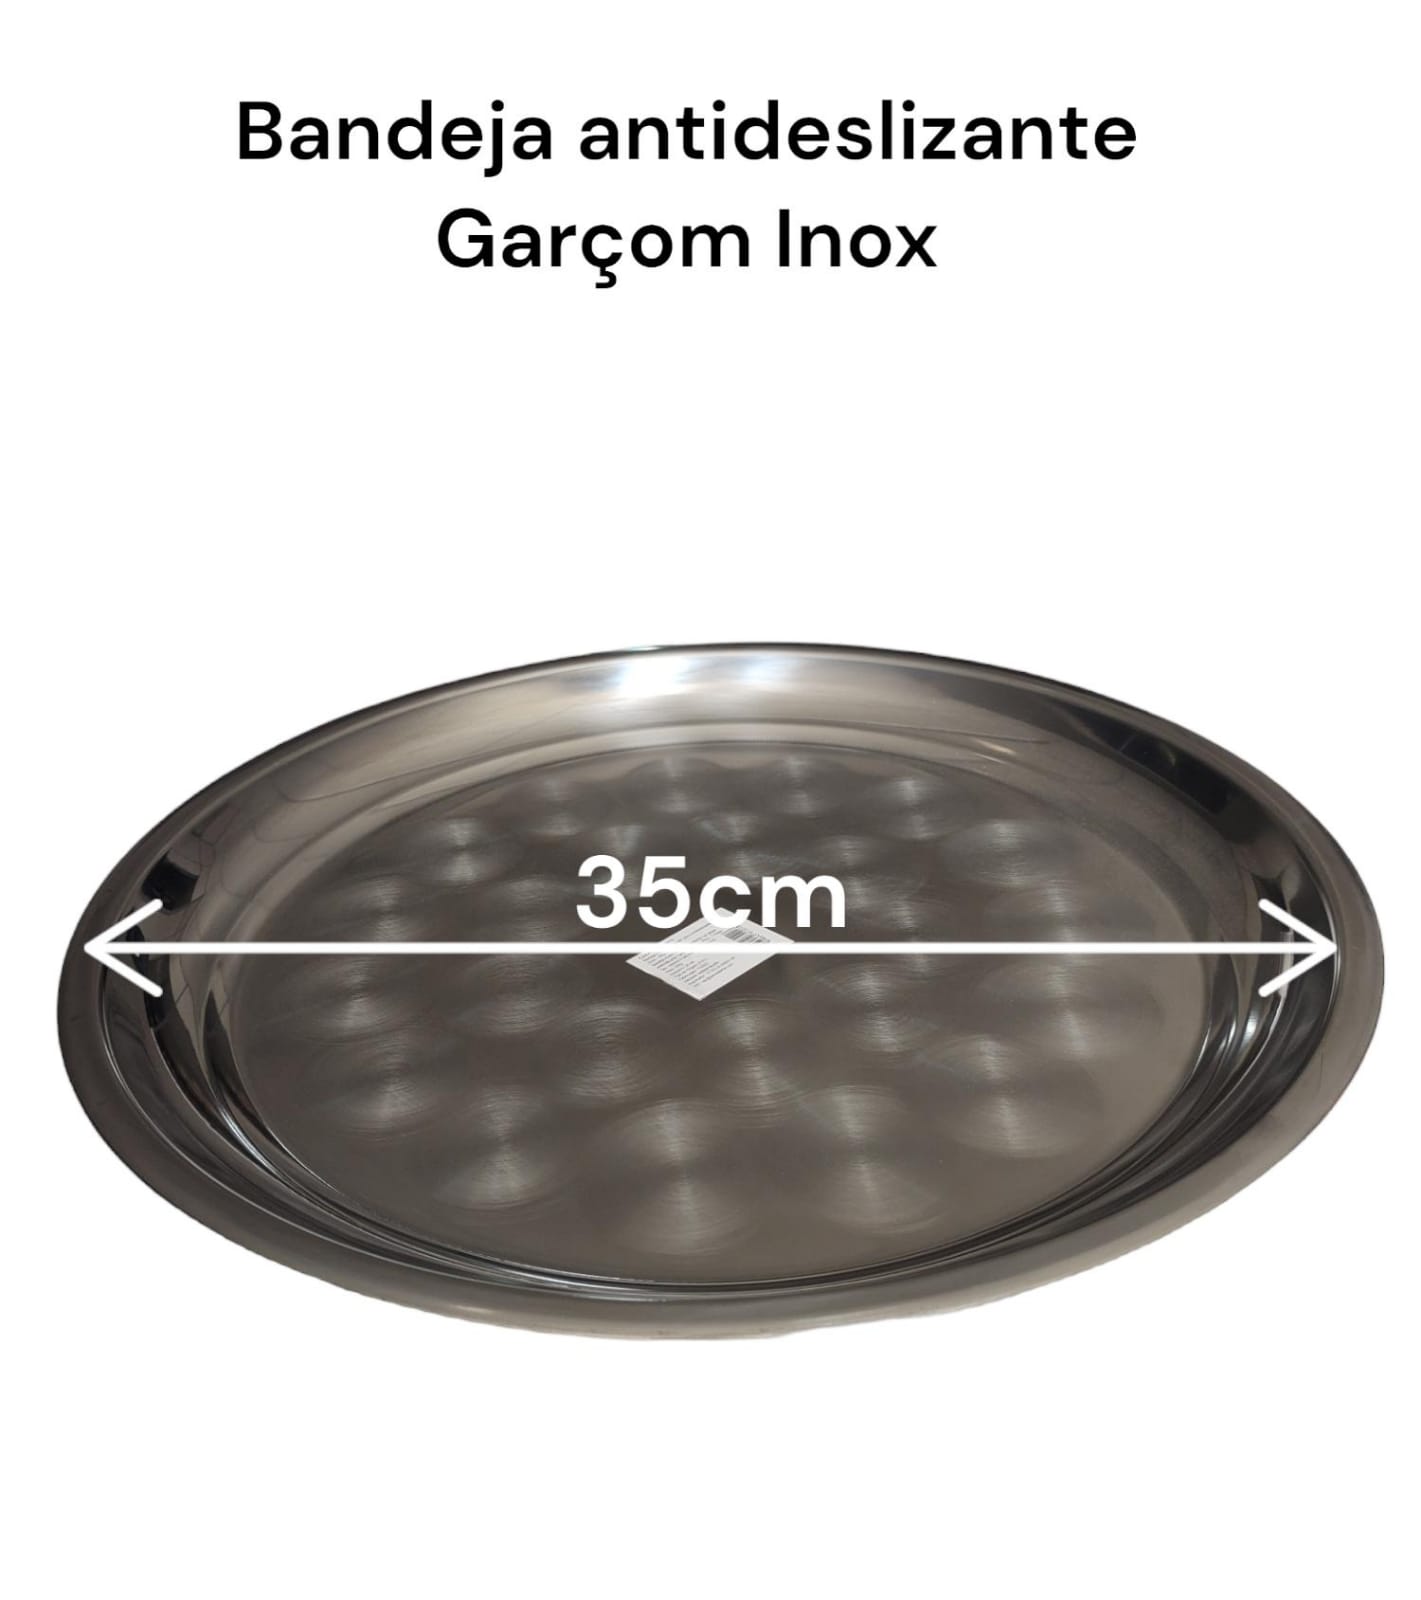 Bandeja Redonda Inox 35cm Placa Antideslizante - Carrefour